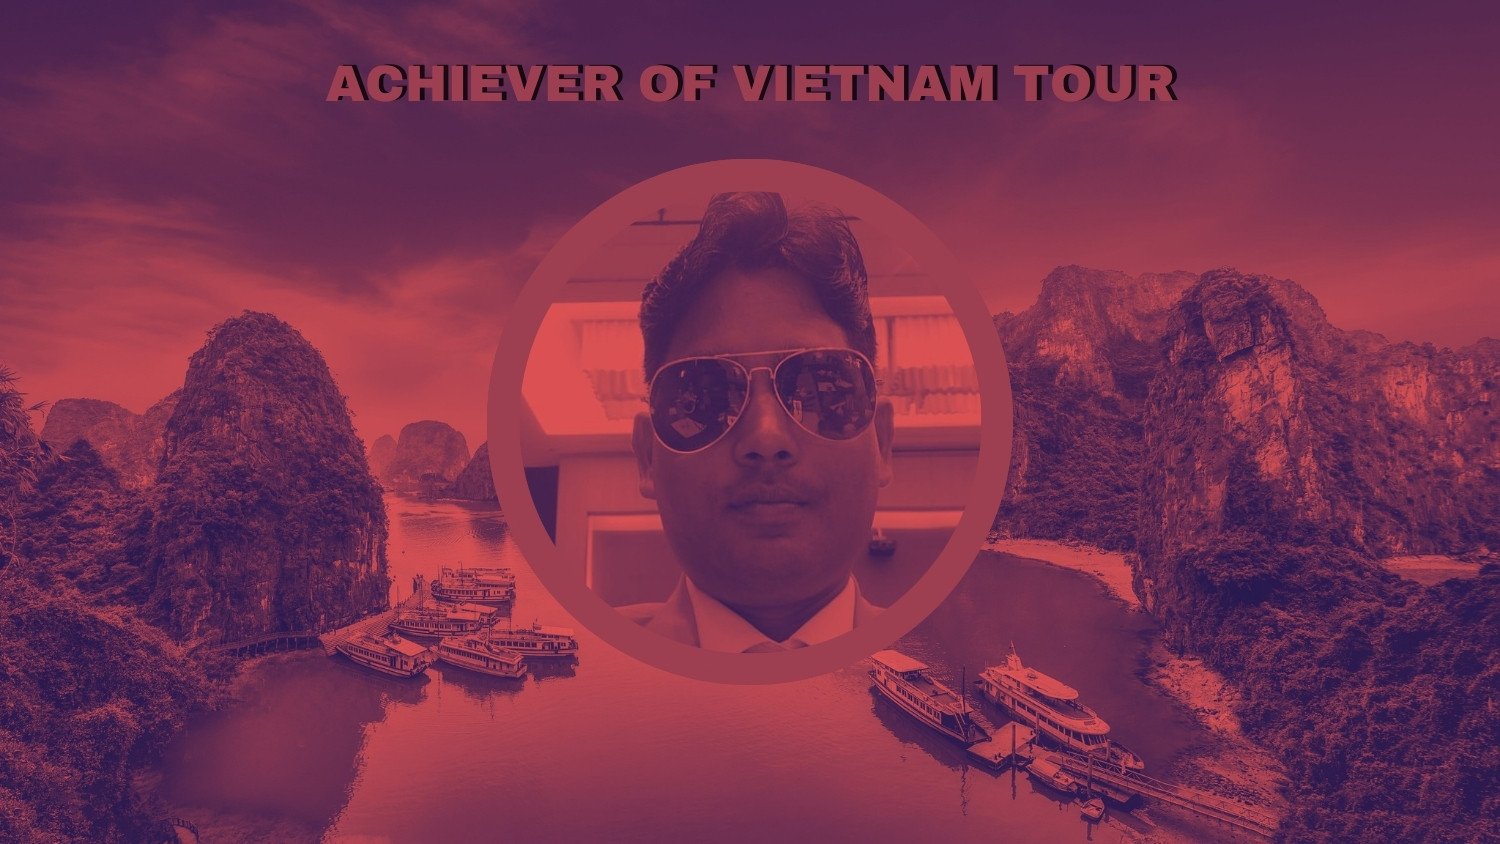 Rubywebcast-Rajkumar Bauddh Triumphing in Ruby Assets Prestigious Vietnam Tour